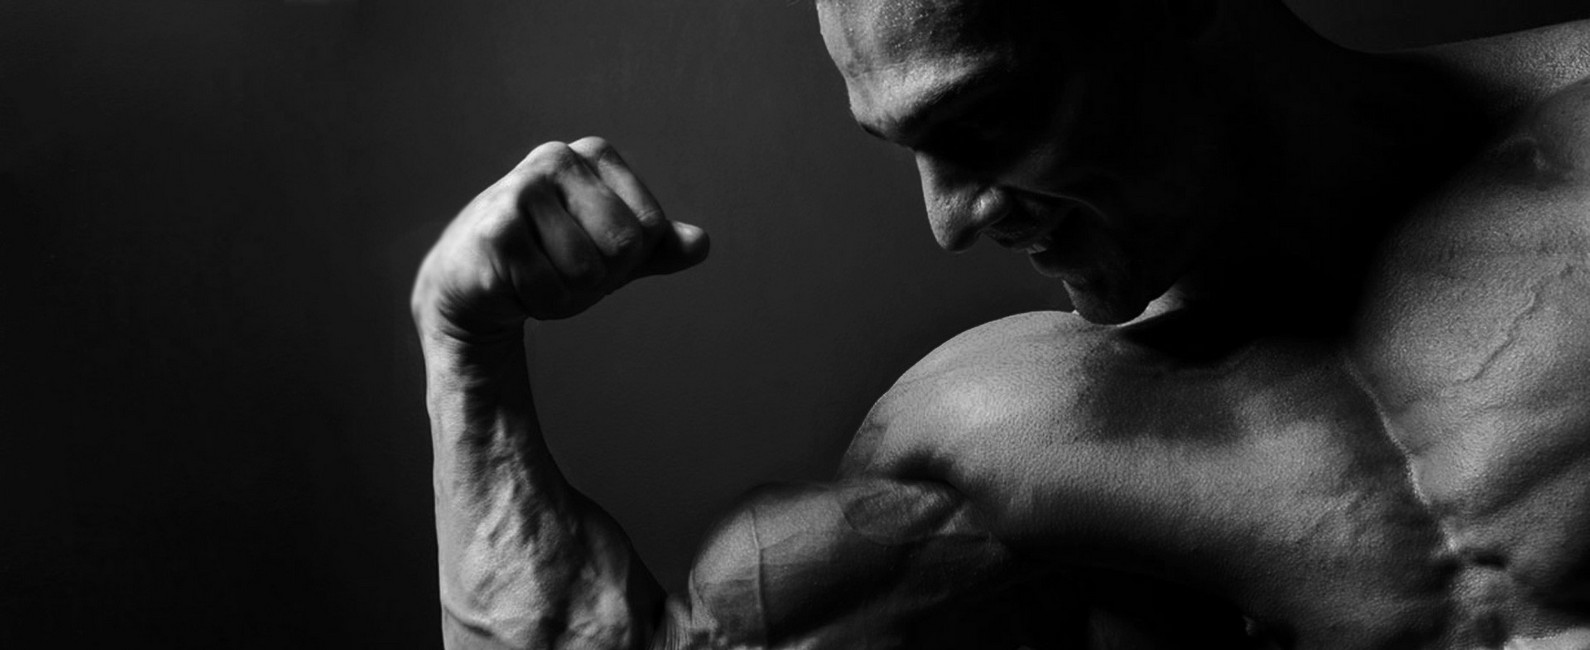 %e6%9c%aa%e5%88%86%e9%a1%9e - - Bulking up fast workout, bulking anabolic steroids